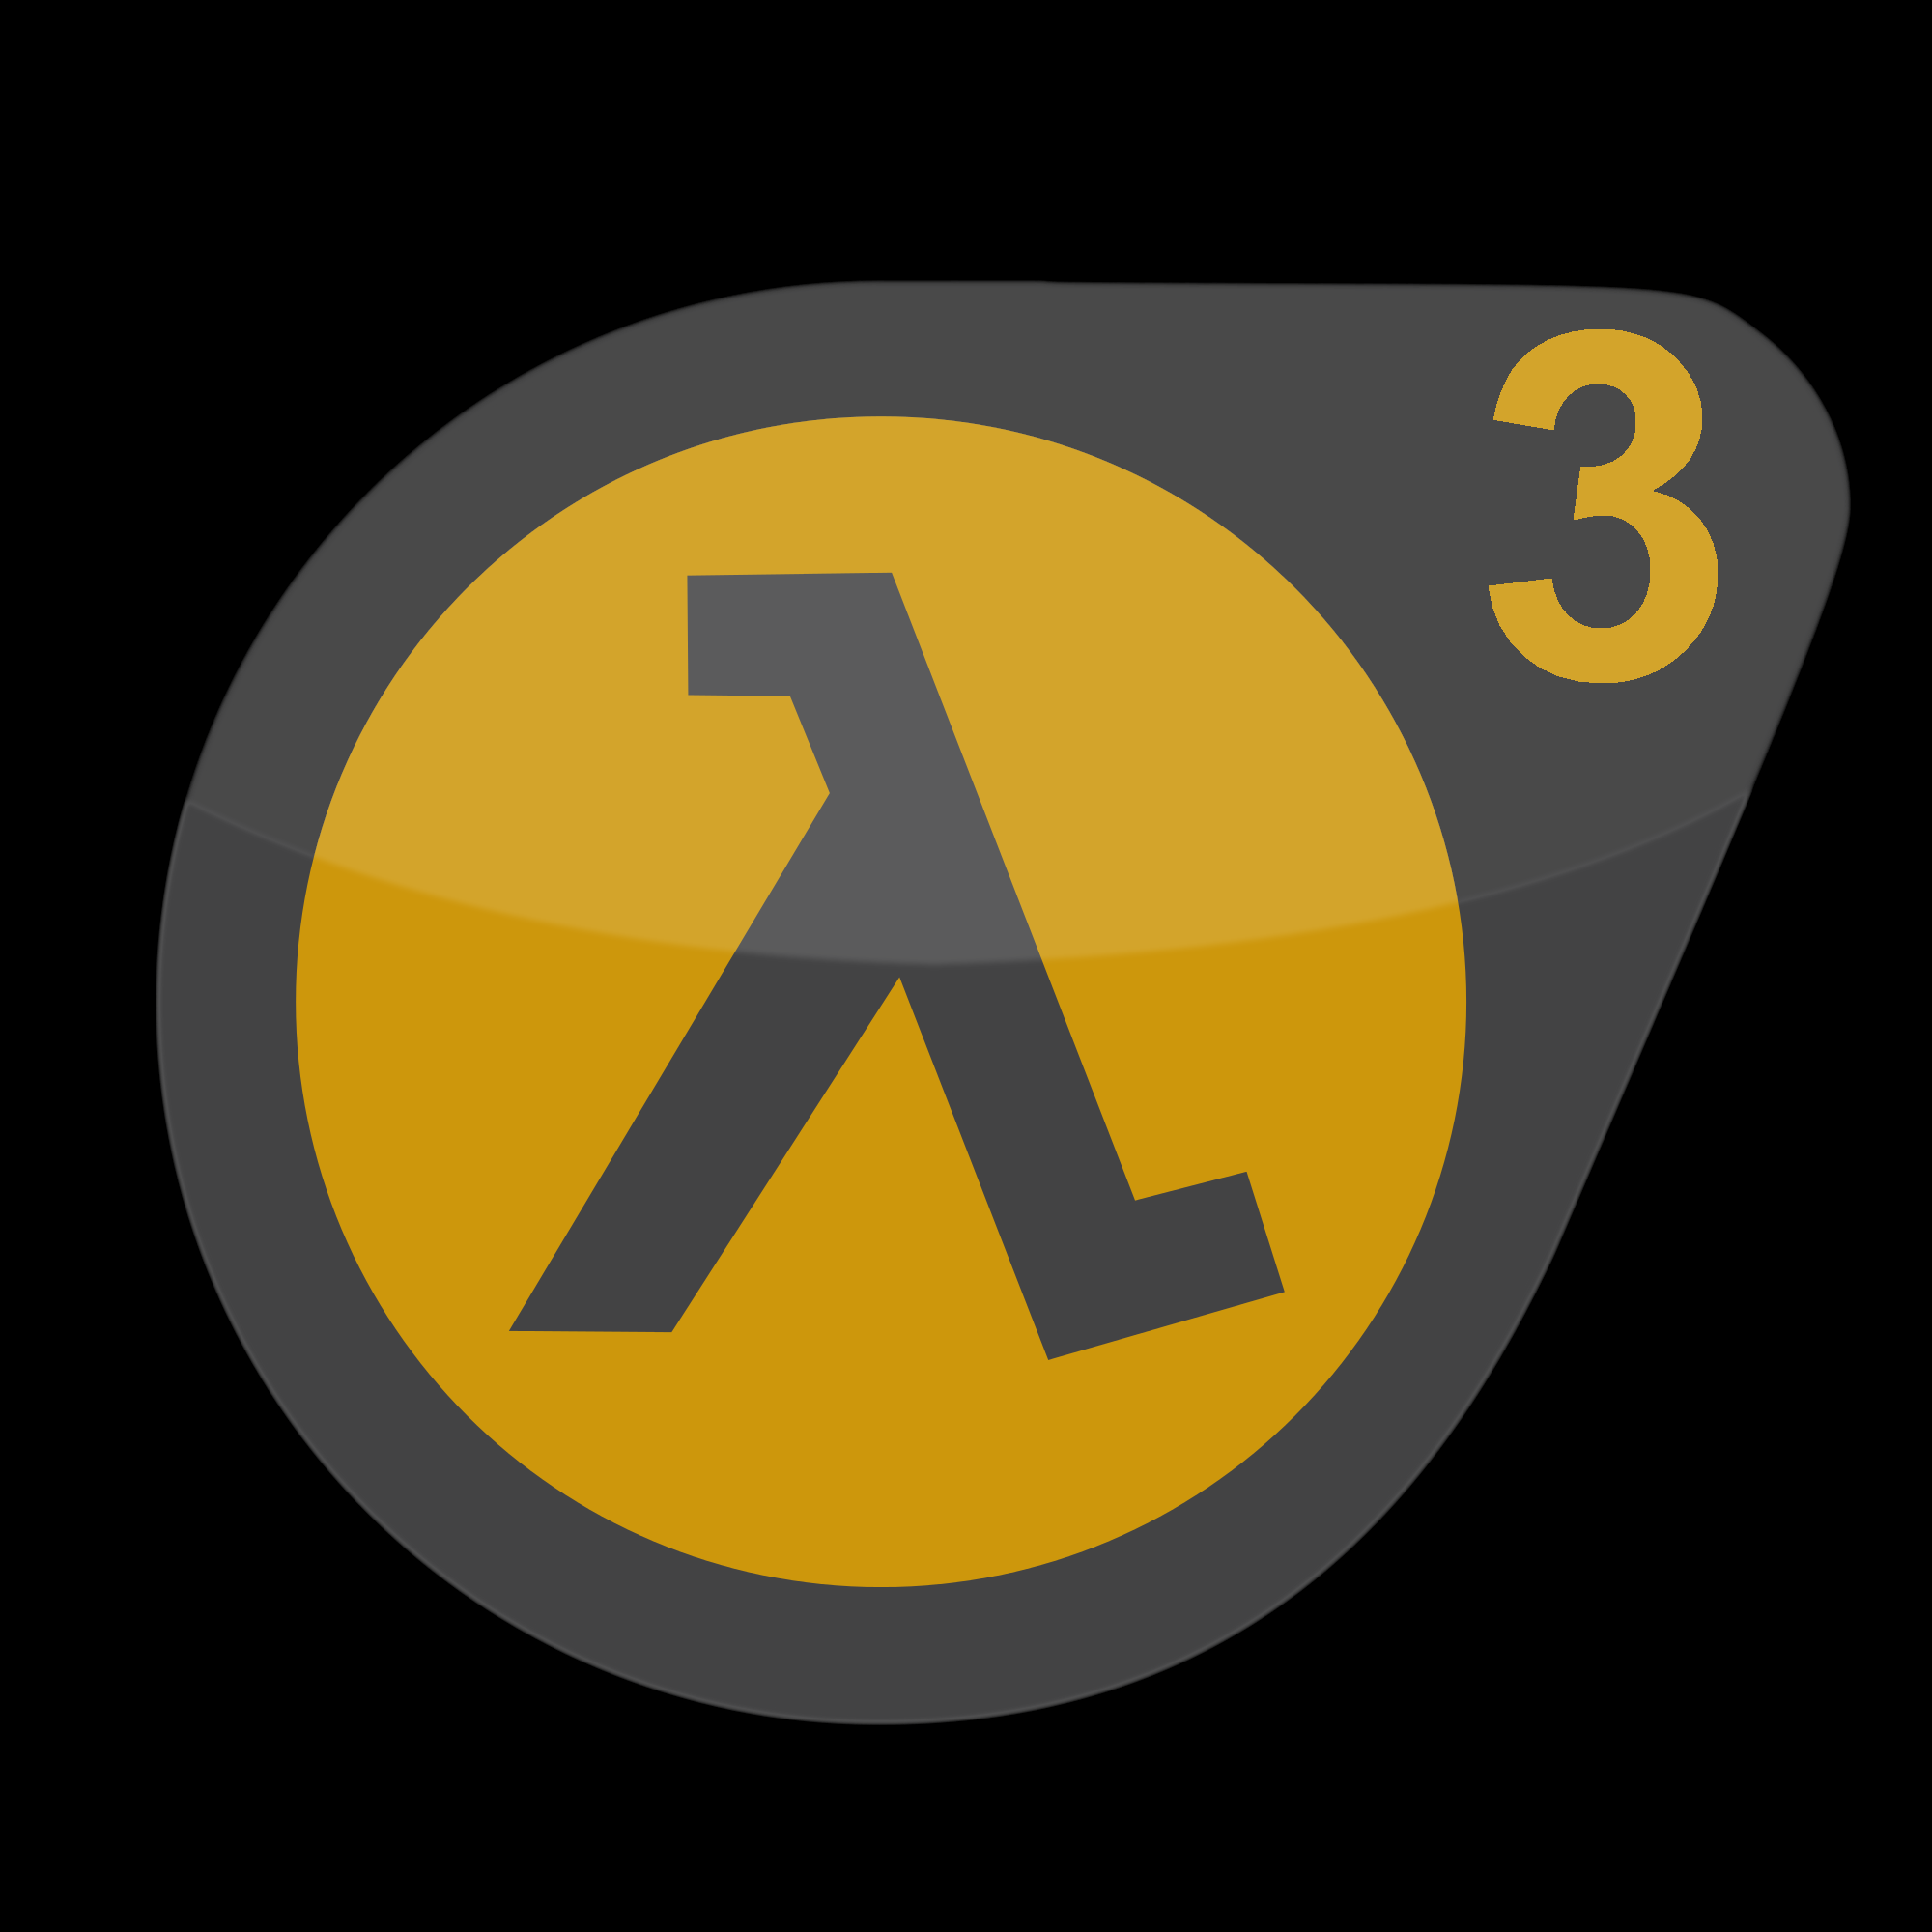 3 g life. Half Life 3 icon. Half Life 2 значок. Half Life 3 logo. Half Life 3 ярлык.